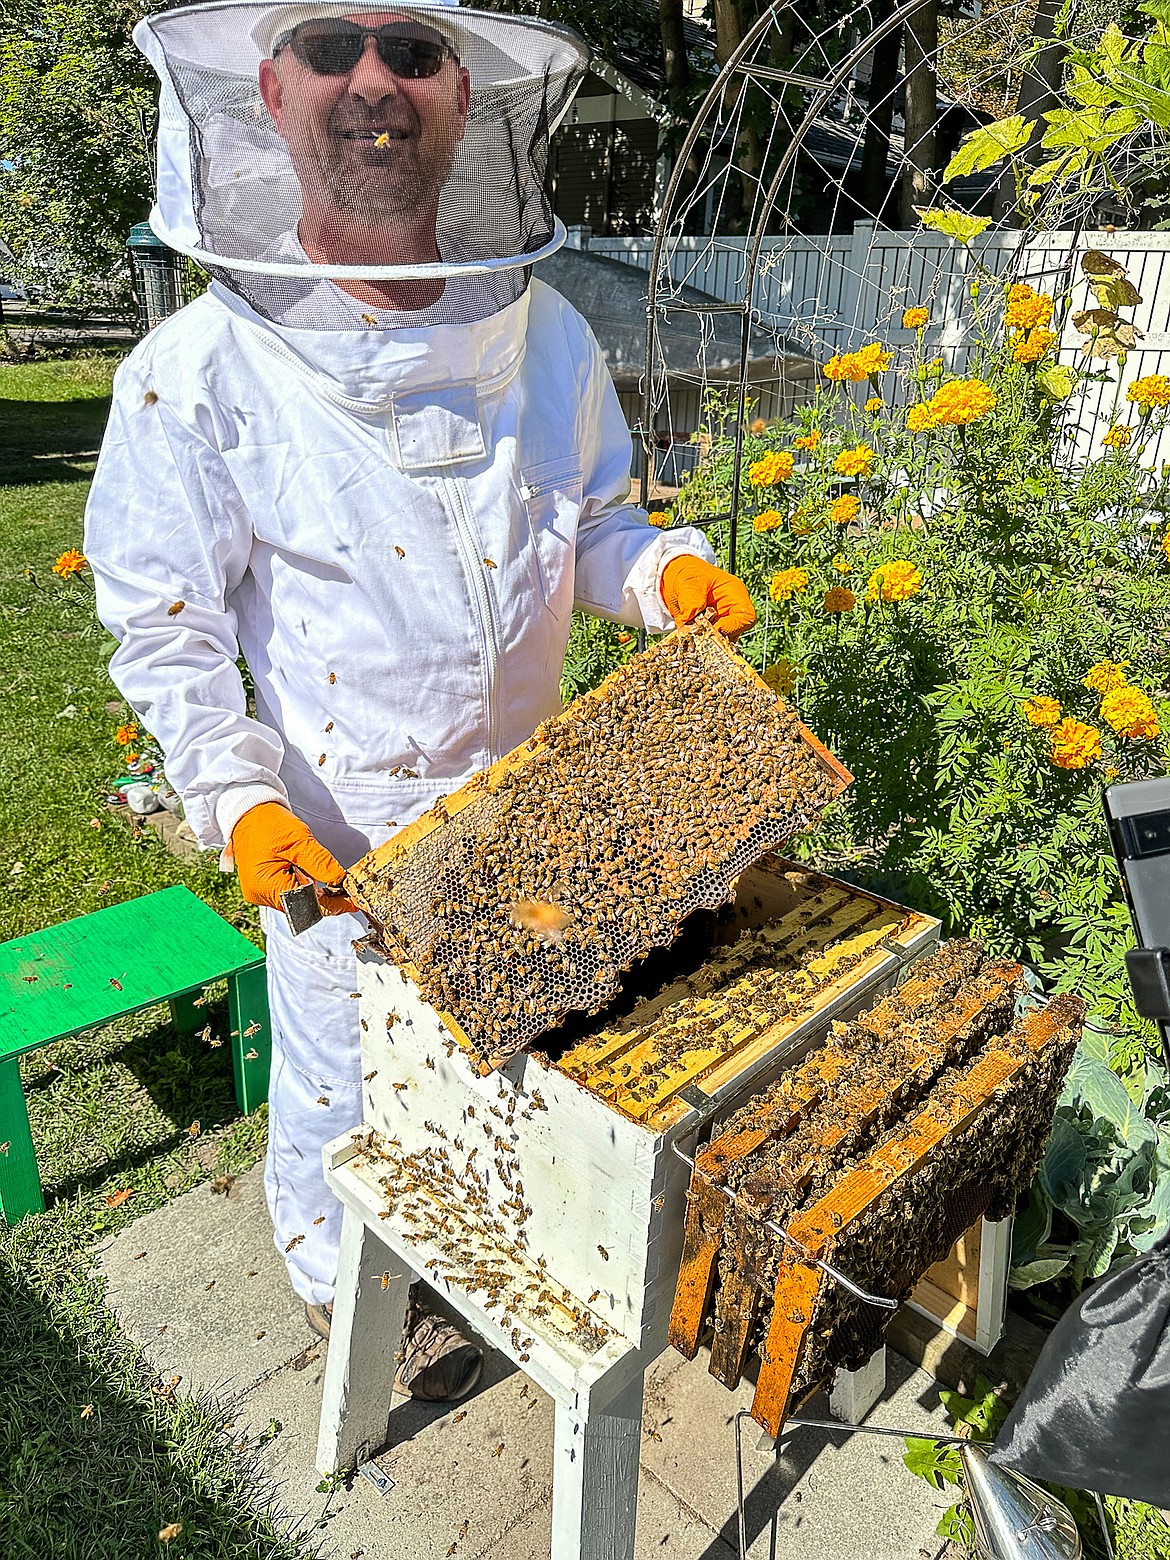 David Gildart shows off his honey bee hive. (Photo courtesy of Bert Gildart)